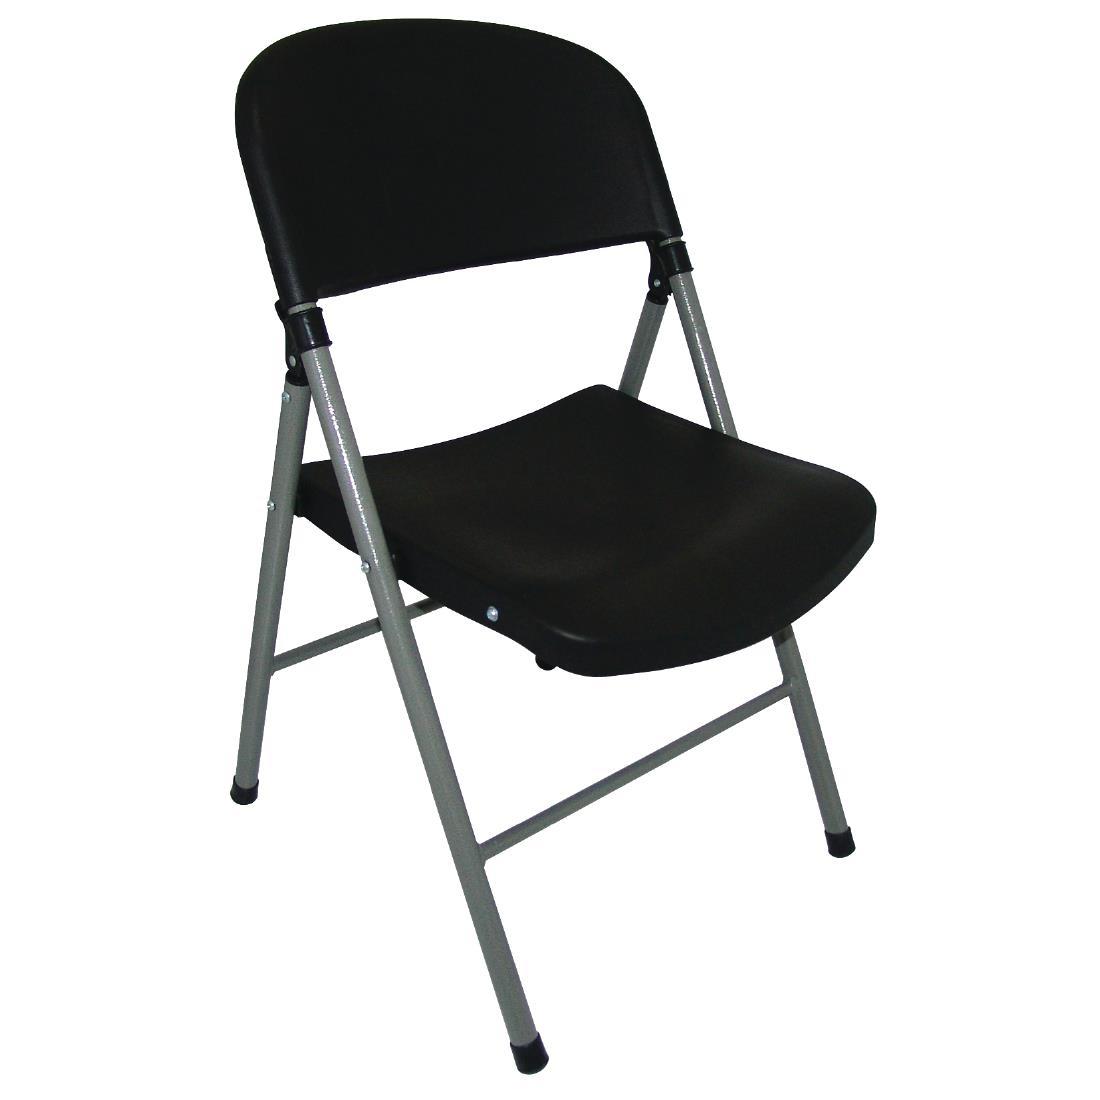 Bolero Foldaway Utility Chairs Black (Pack of 2) - CE693  - 1